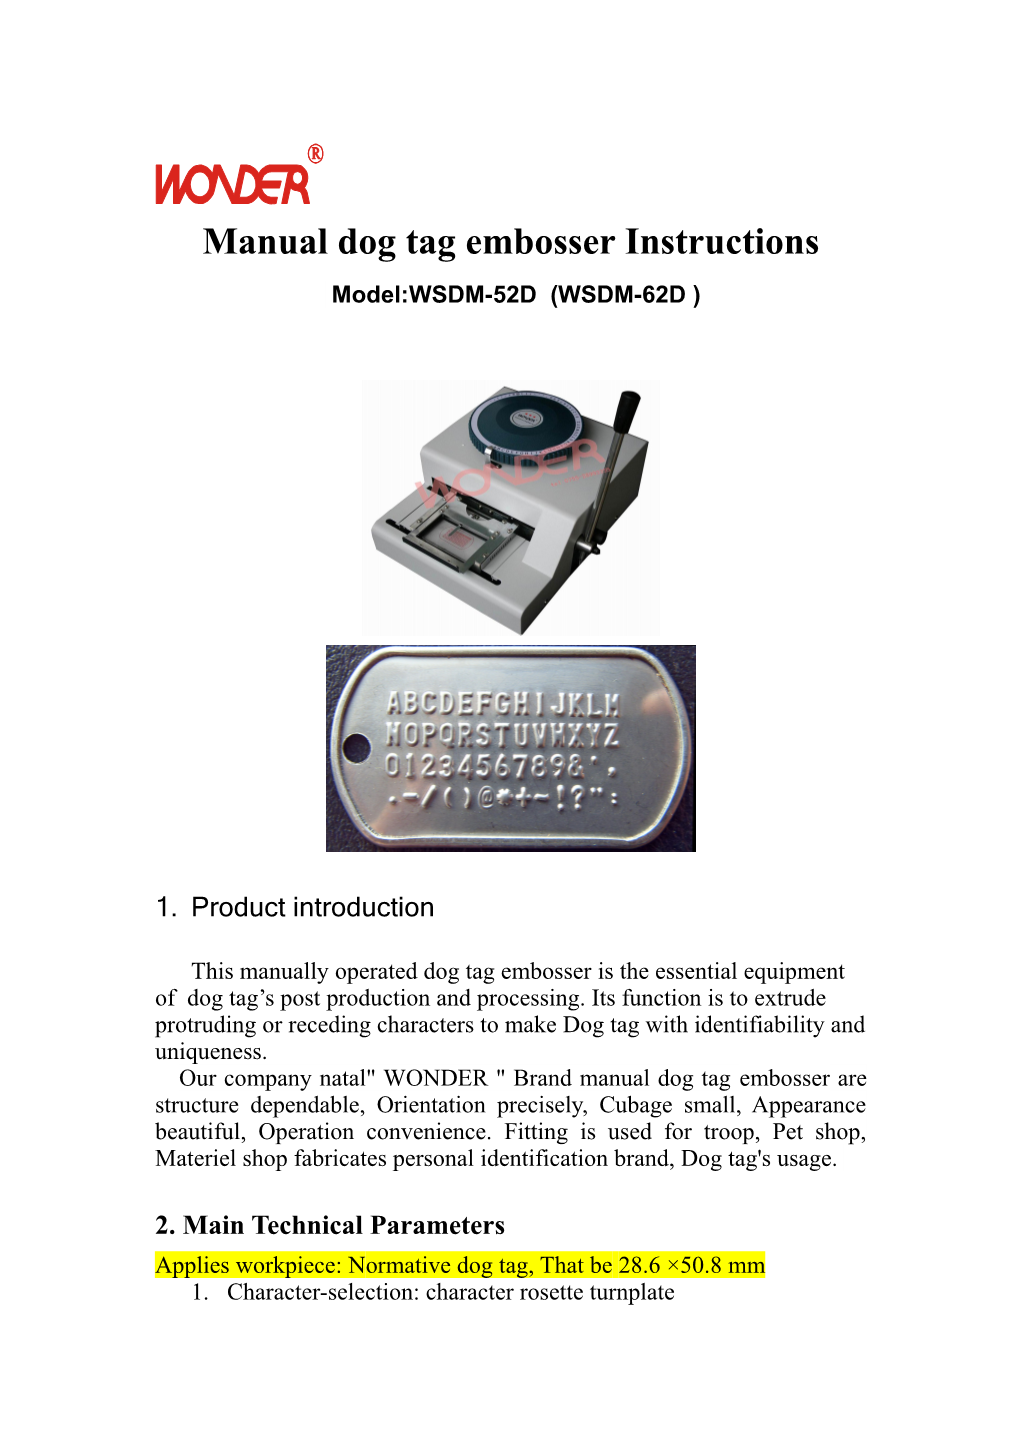 Manualdog Tag Embosserinstructions